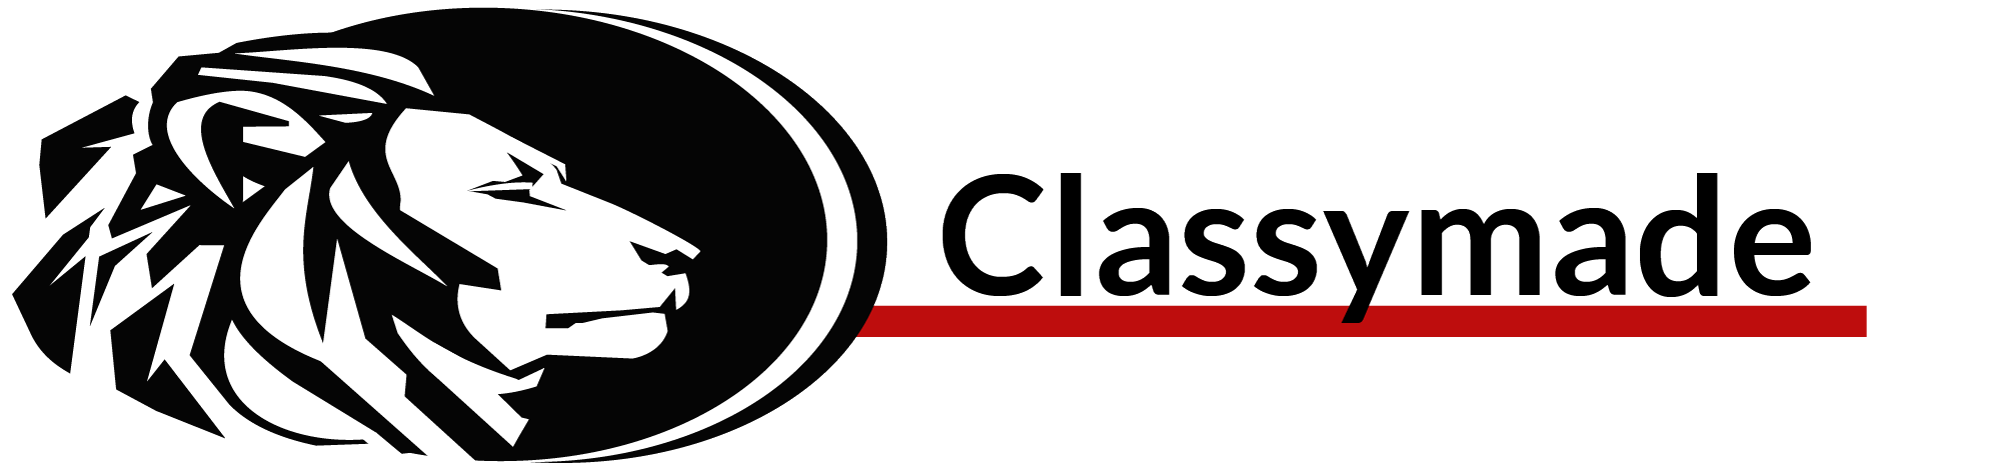 Classymade GmbH